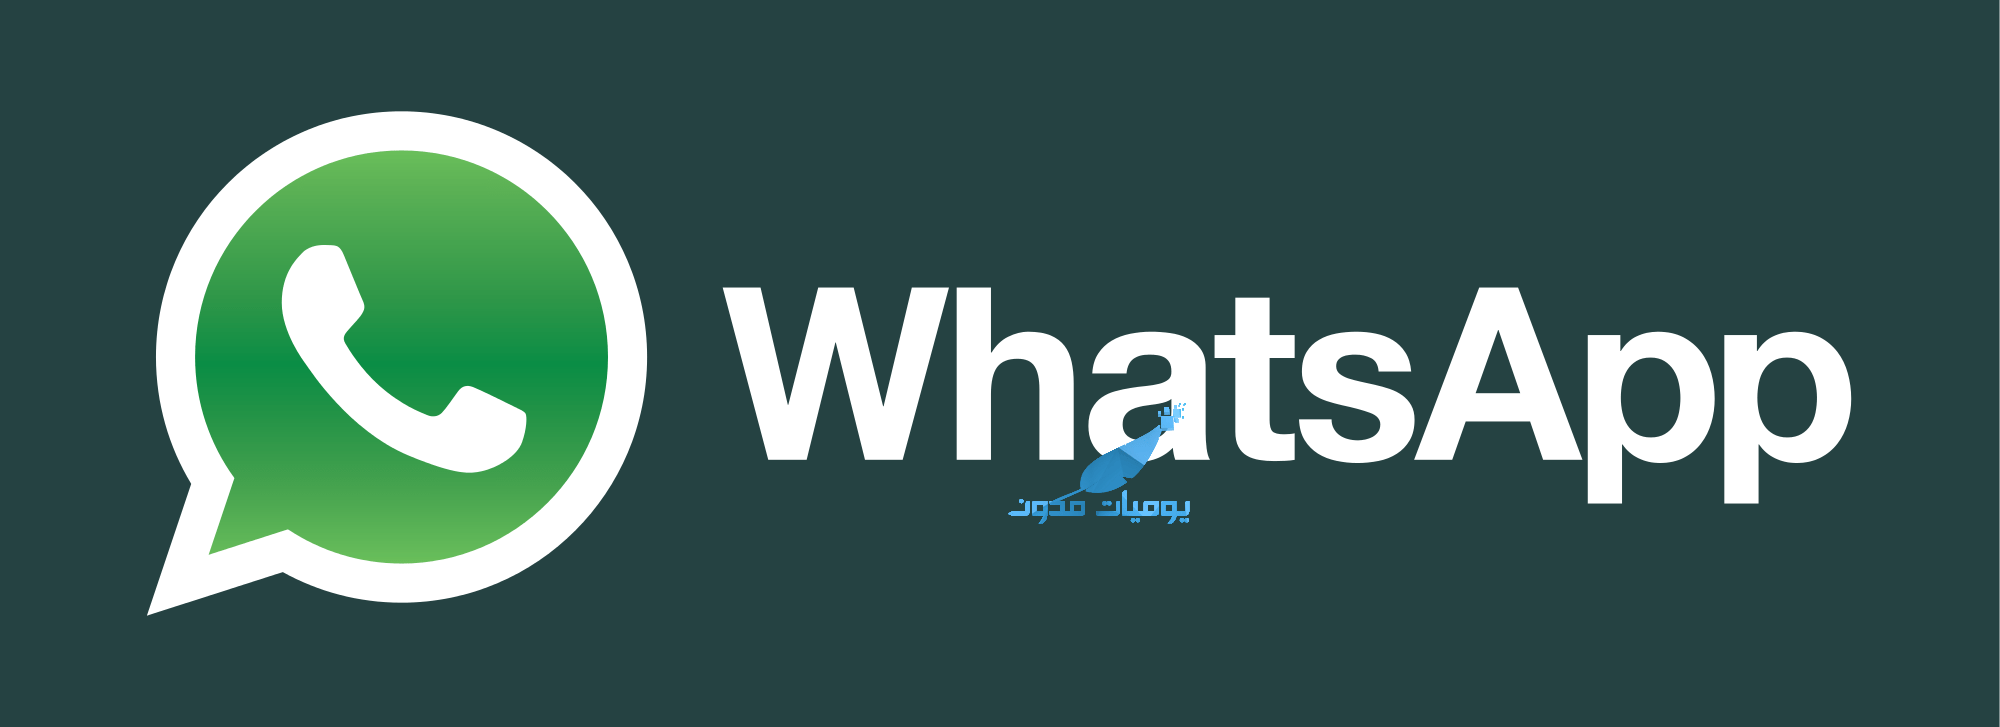 WhatsApp logo.svg  - و أخيرا أصبح واتساب يستخدم الآن نظام تشفير ذو مستوى عالي